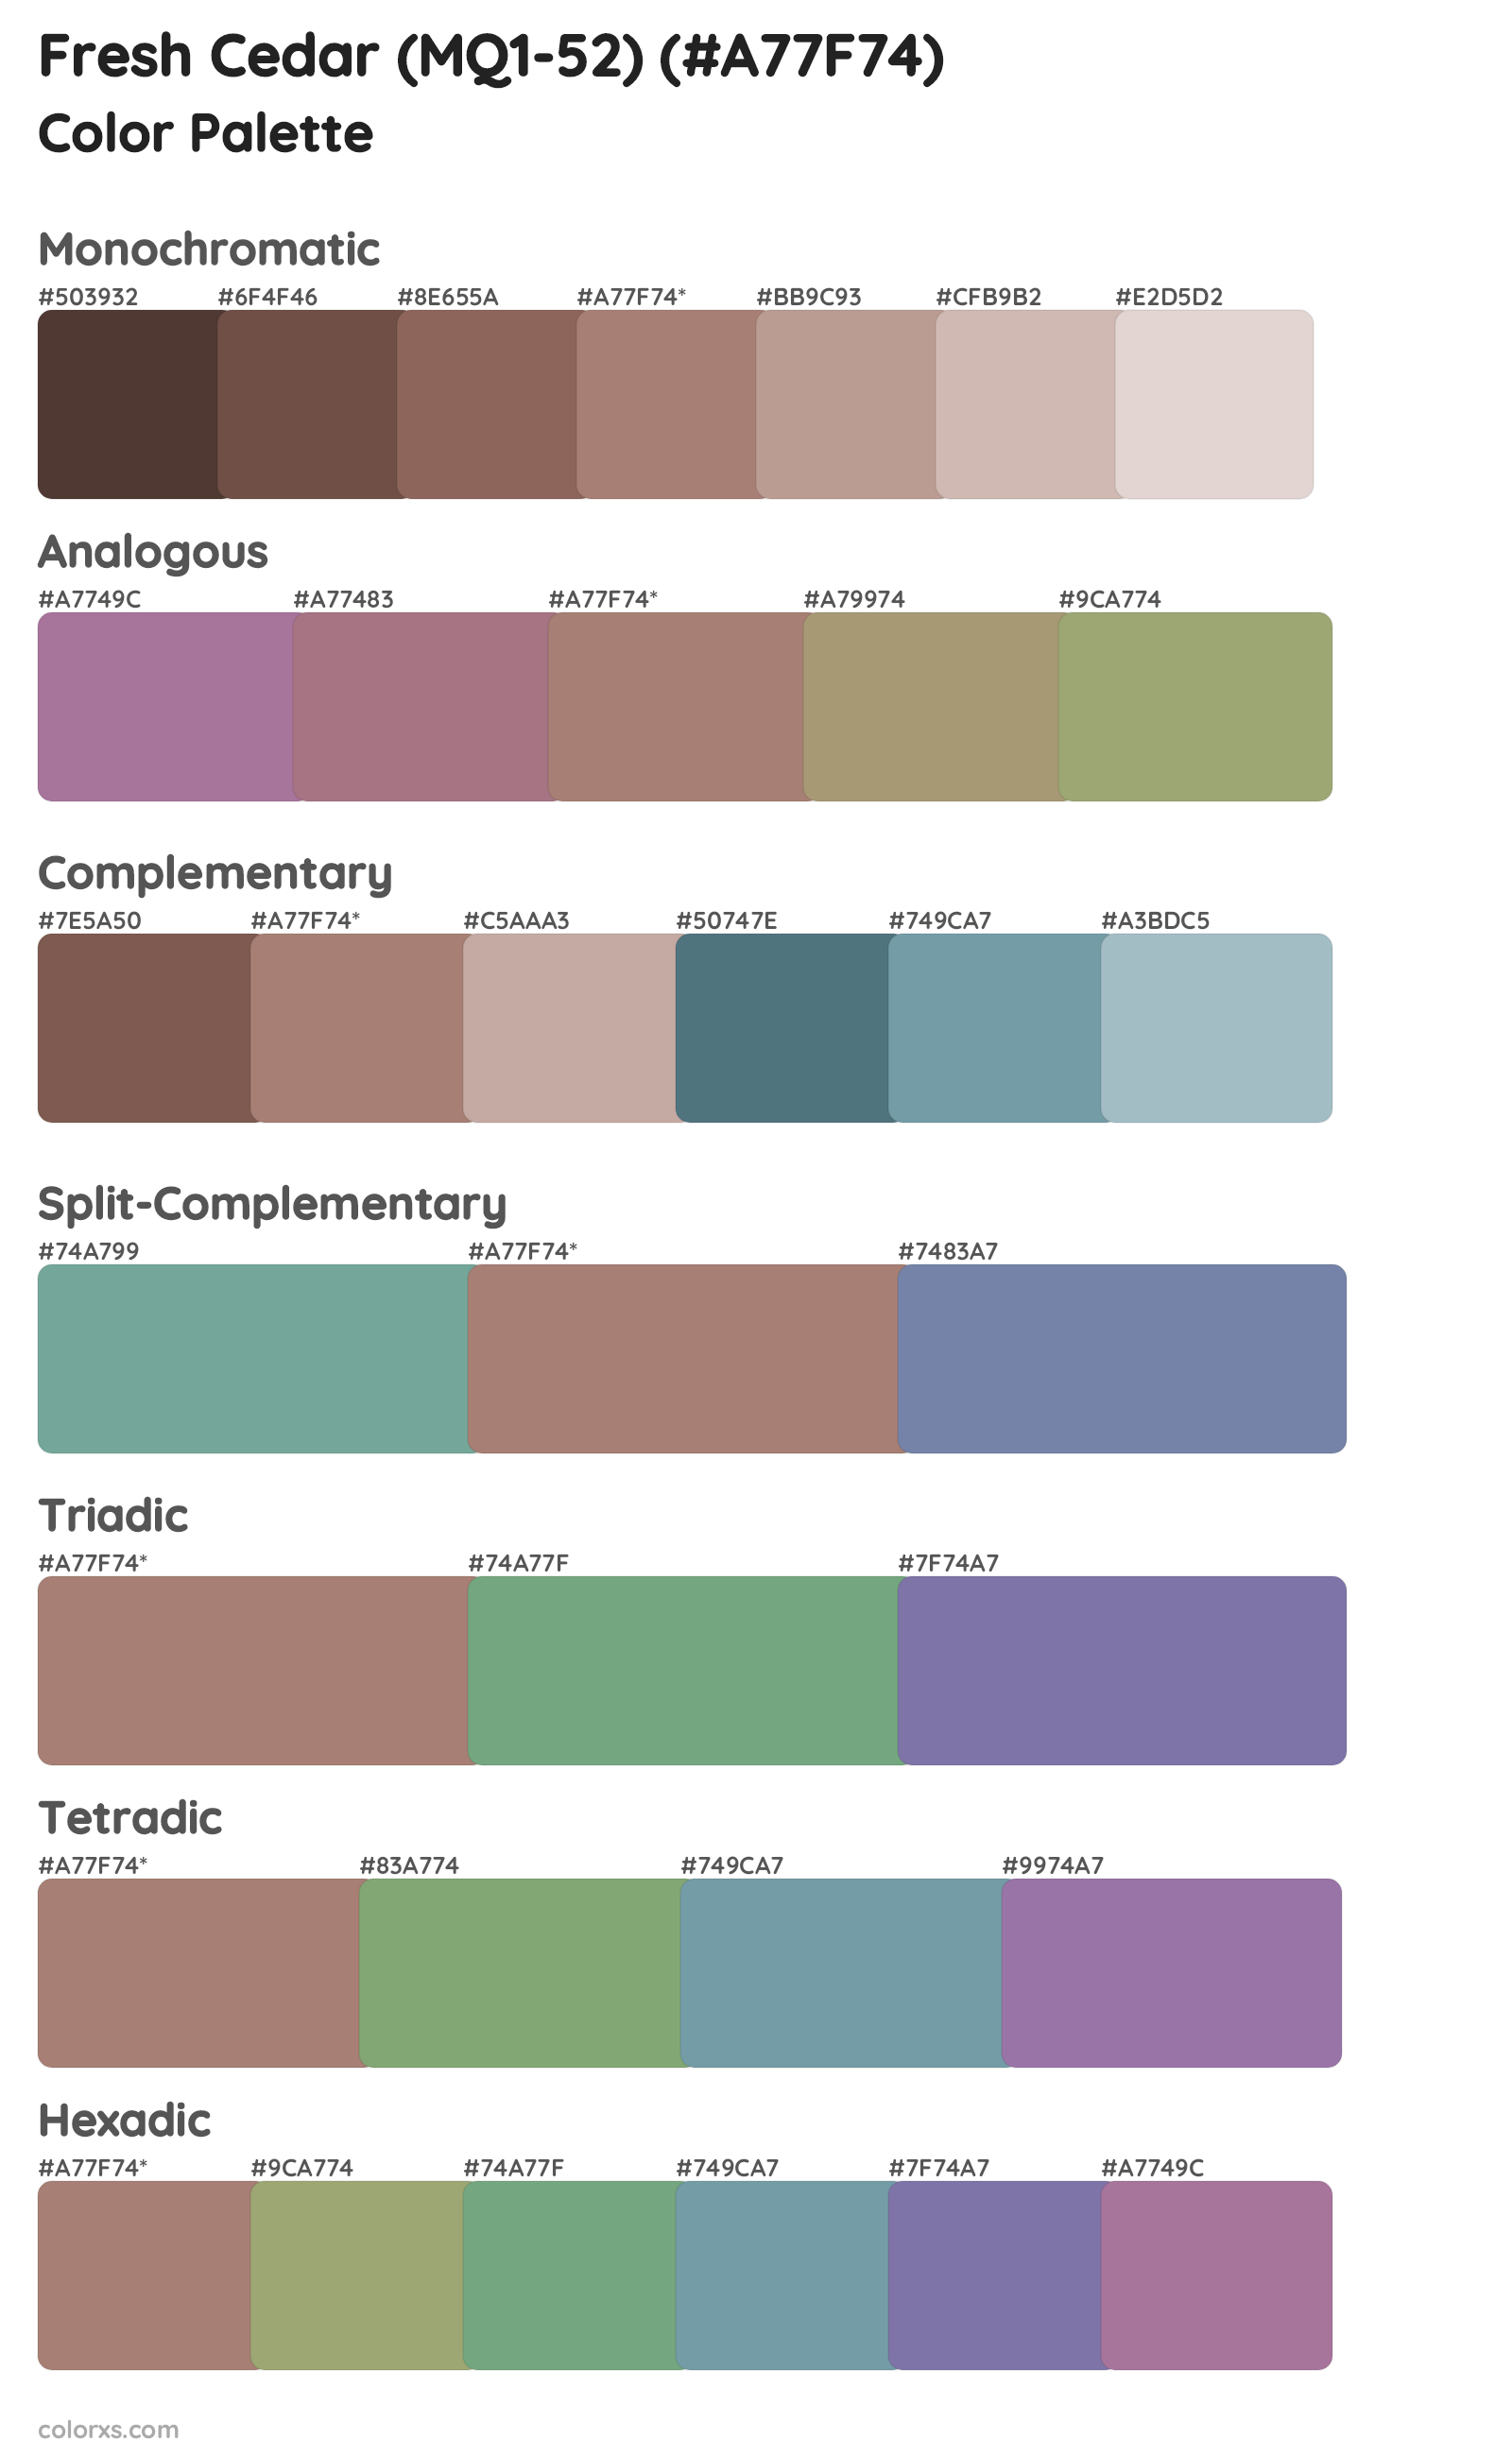 Fresh Cedar (MQ1-52) Color Scheme Palettes